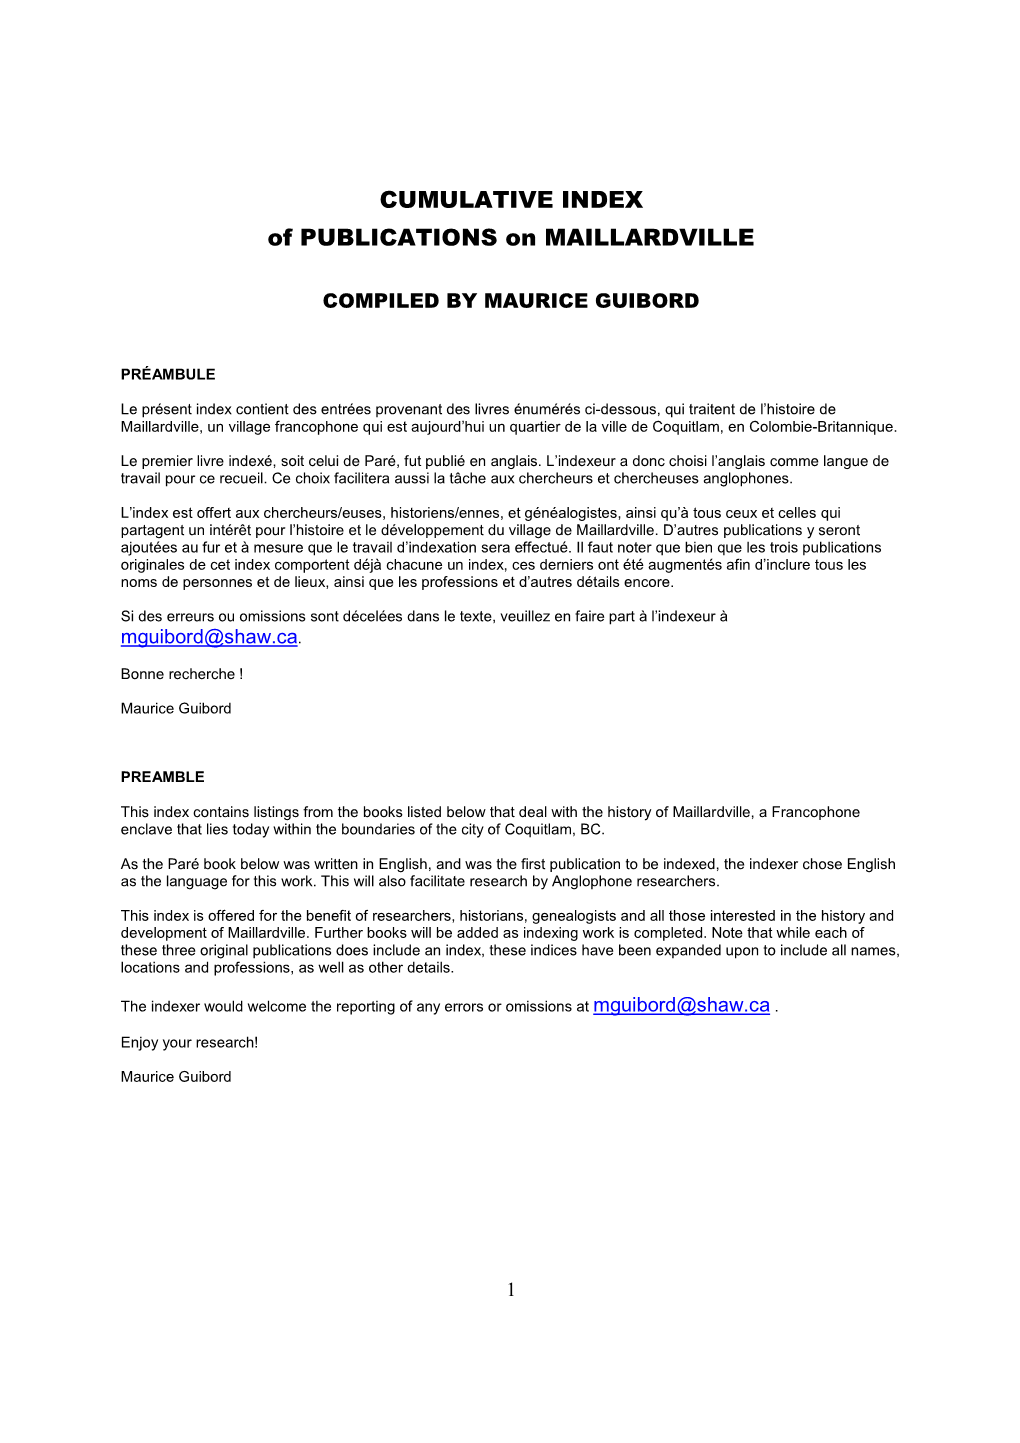 CUMULATIVE INDEX of PUBLICATIONS on MAILLARDVILLE